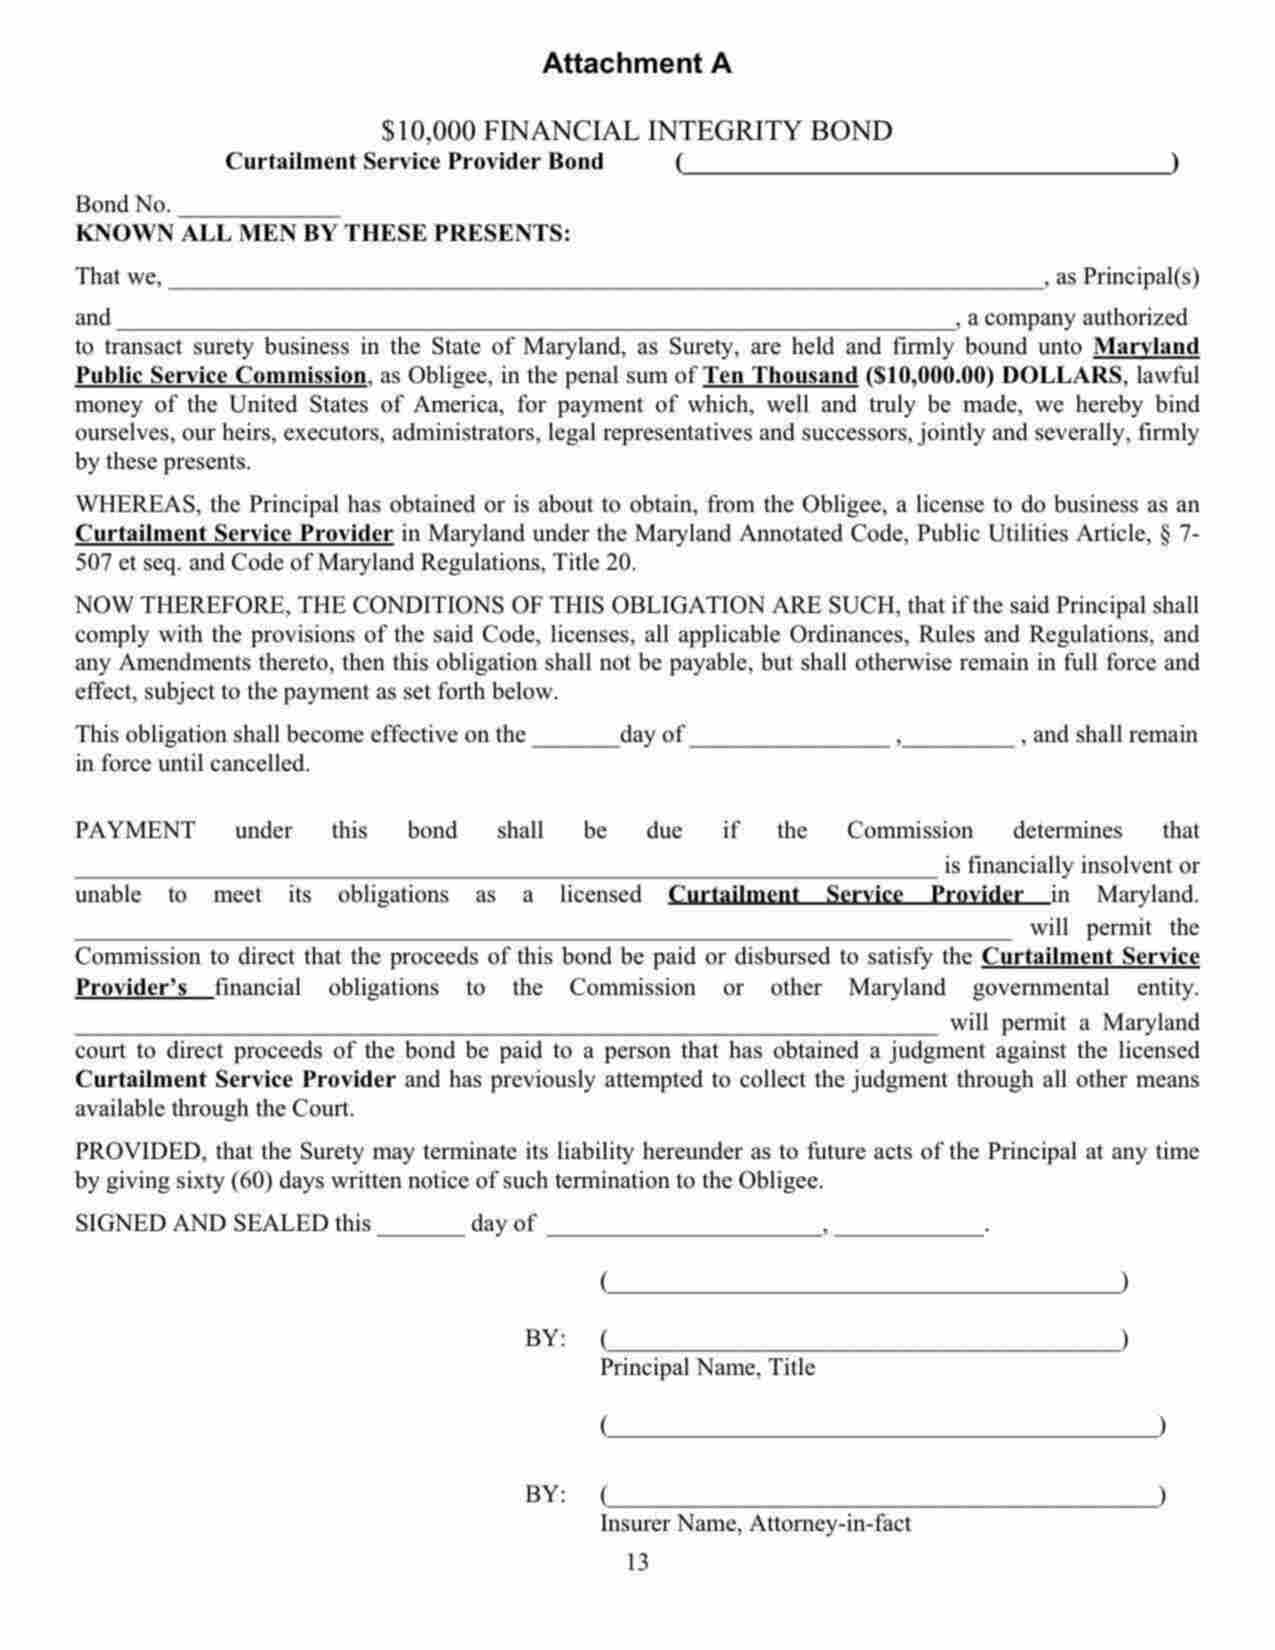 Maryland Curtailment Service Provider Bond Form